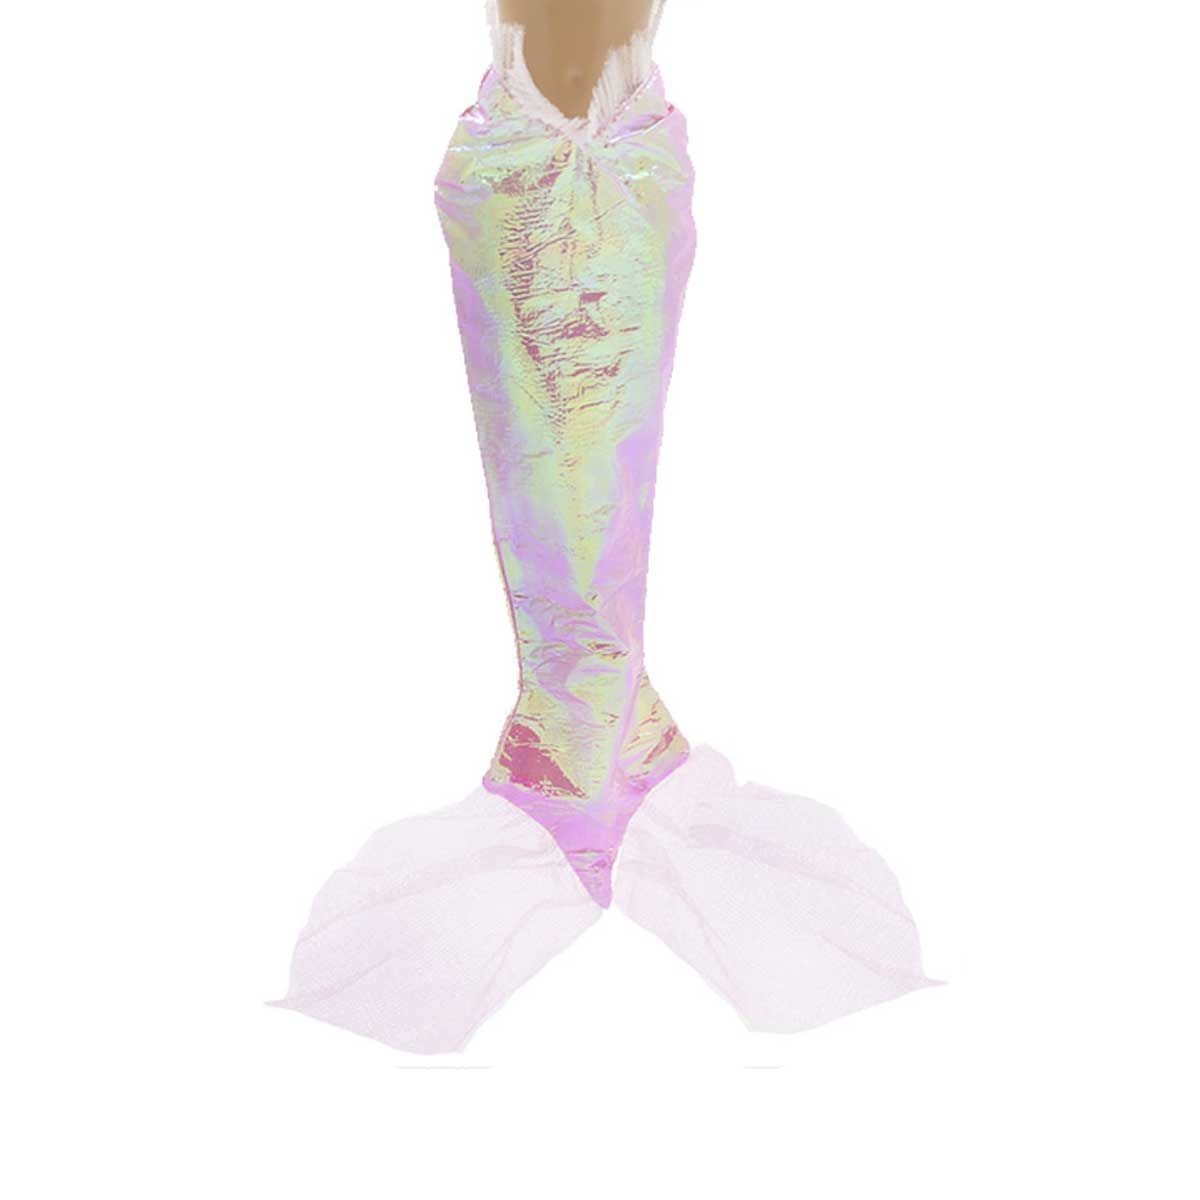 Хвост русалки Dolls Accessories для Барби и кукол 29 см косметичка кошелек с пайетками хвост русалки 15 см текстиль 12 00702 014